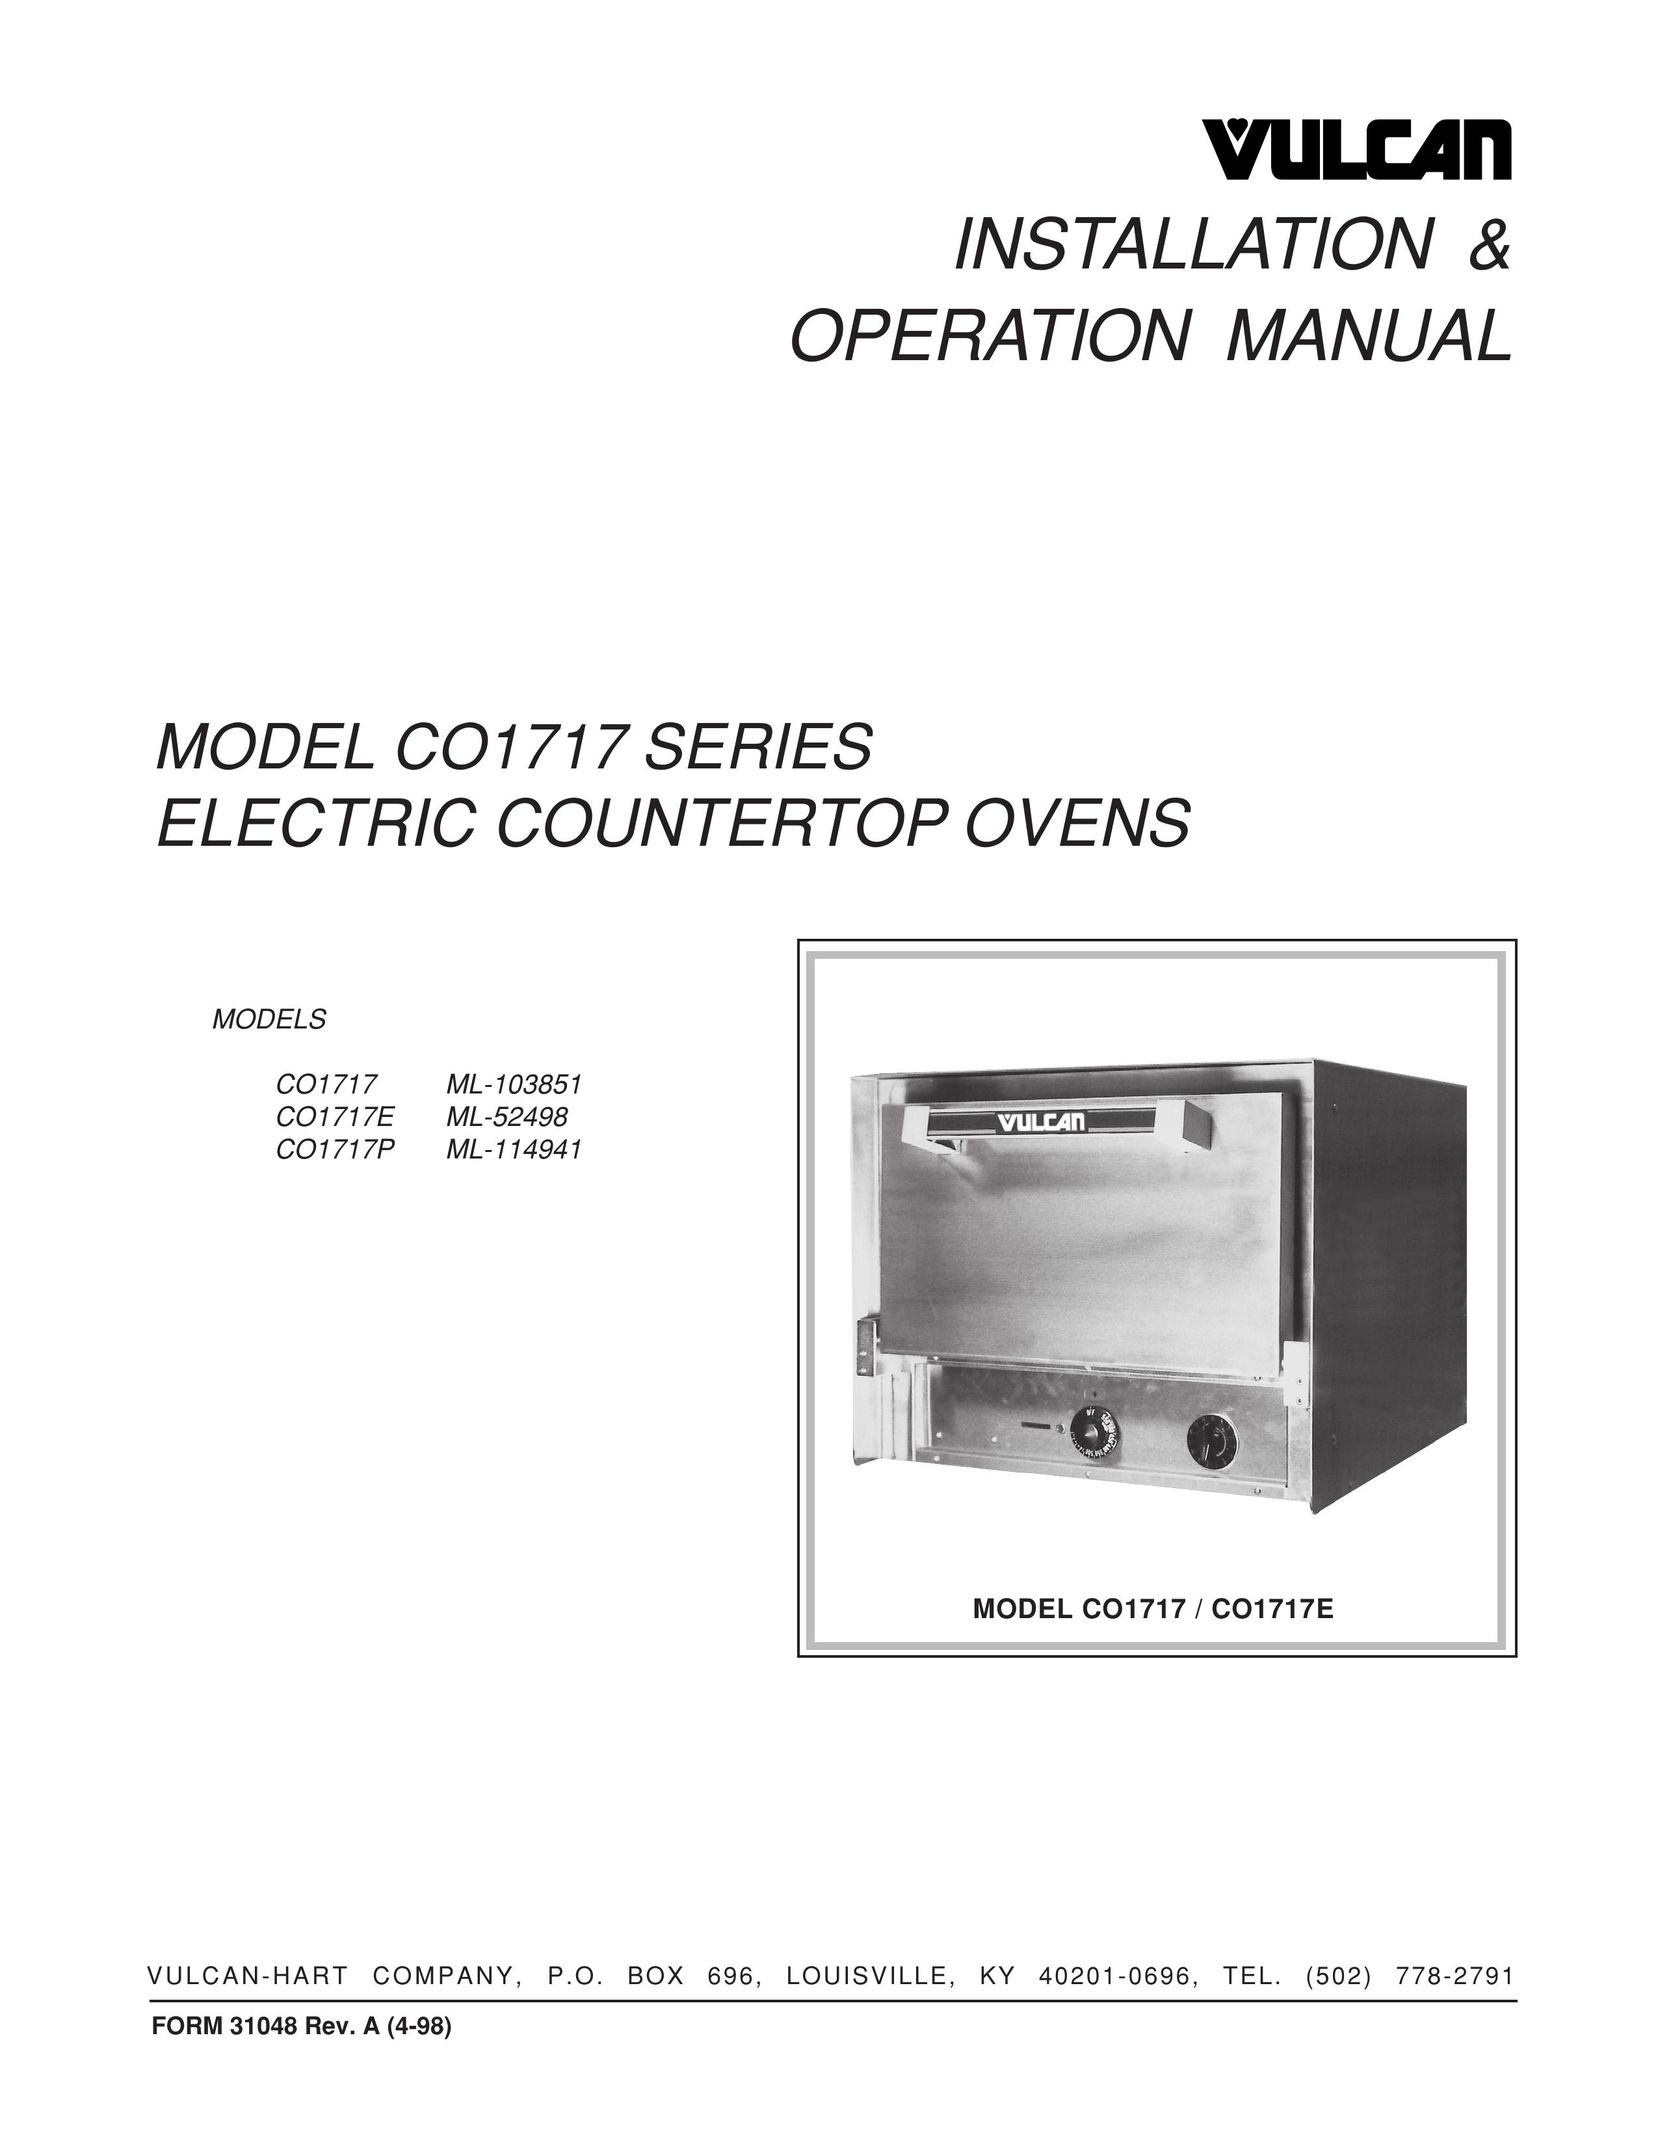 Vulcan-Hart CO1717P Oven User Manual